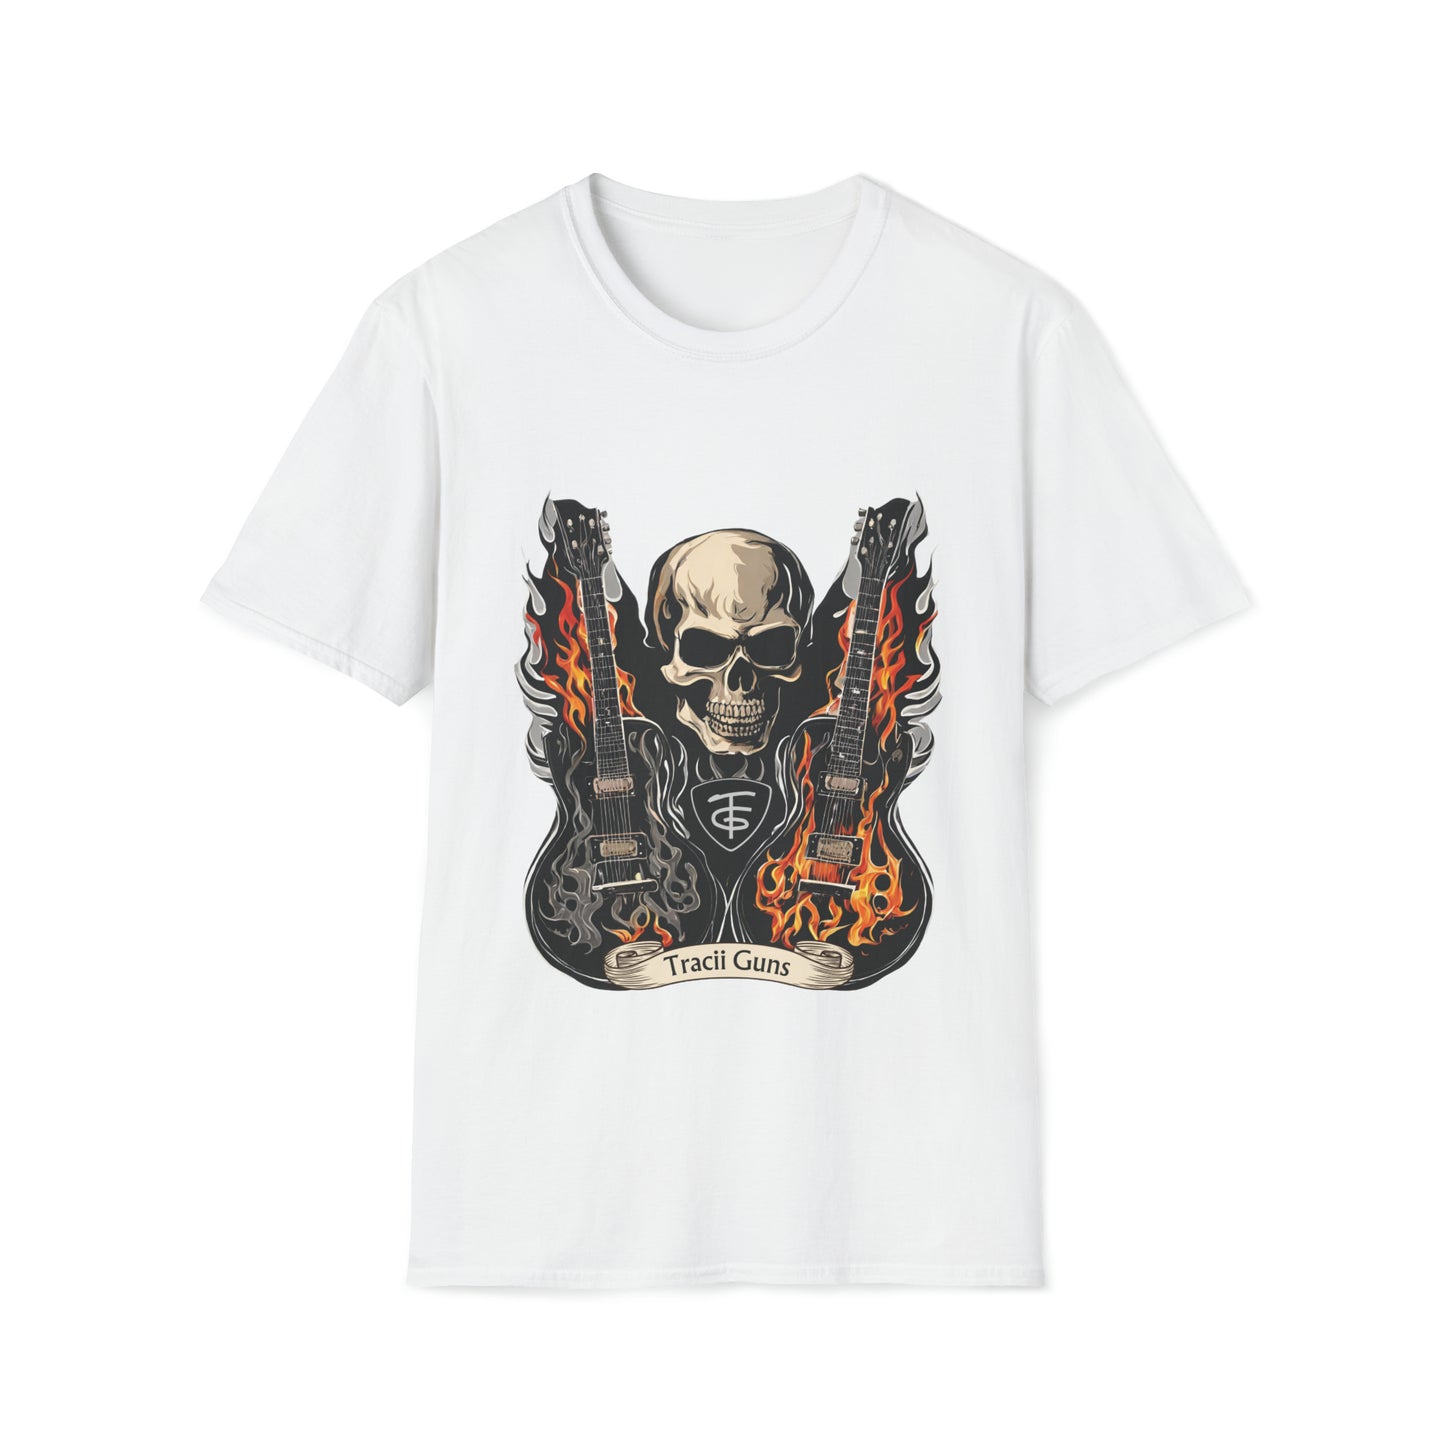 TFG LOGO Guitar Skull Shirt